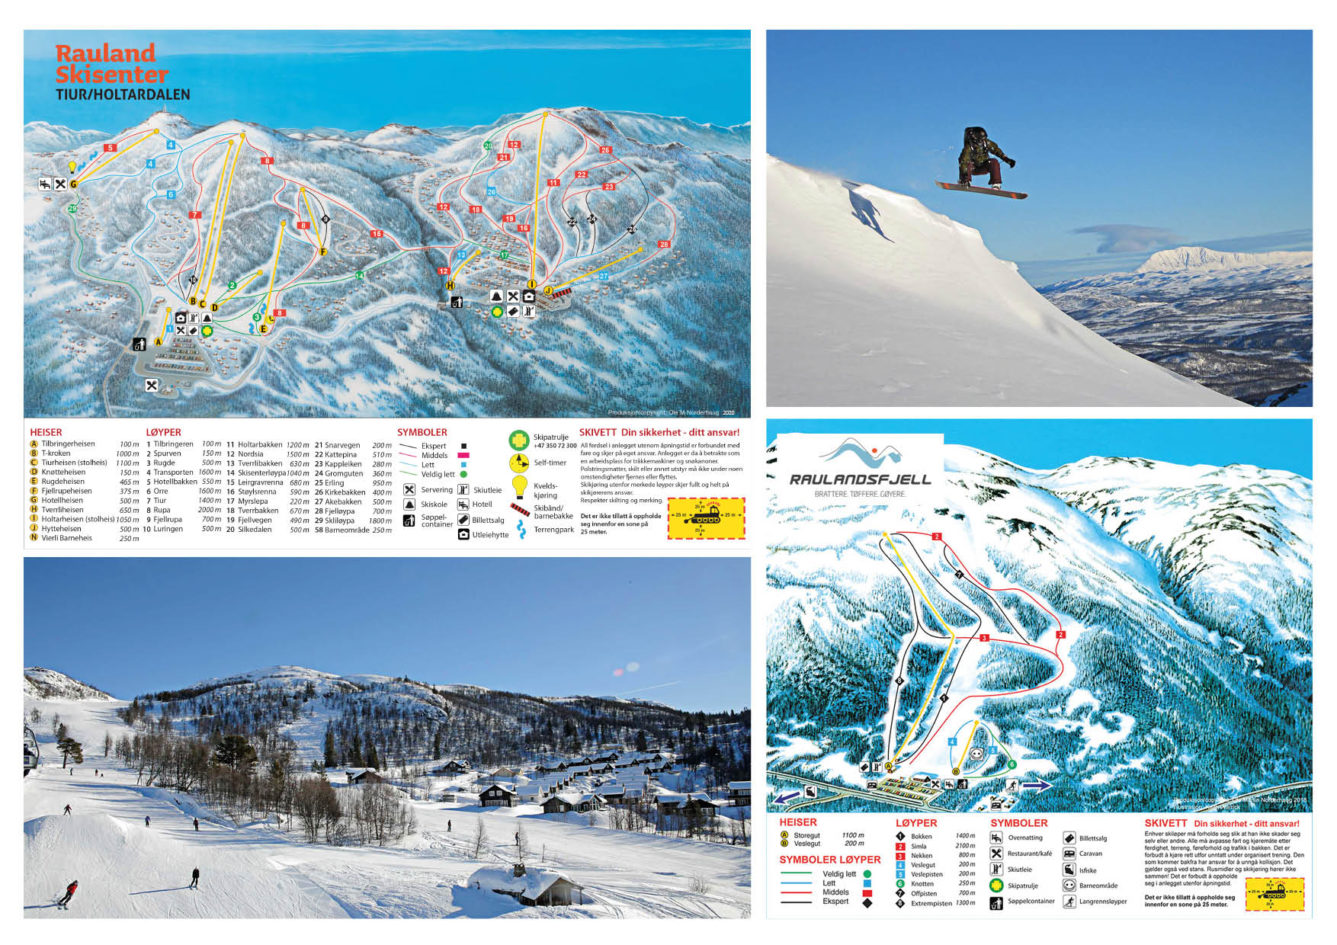 løypekart-collage Rauland skisenter